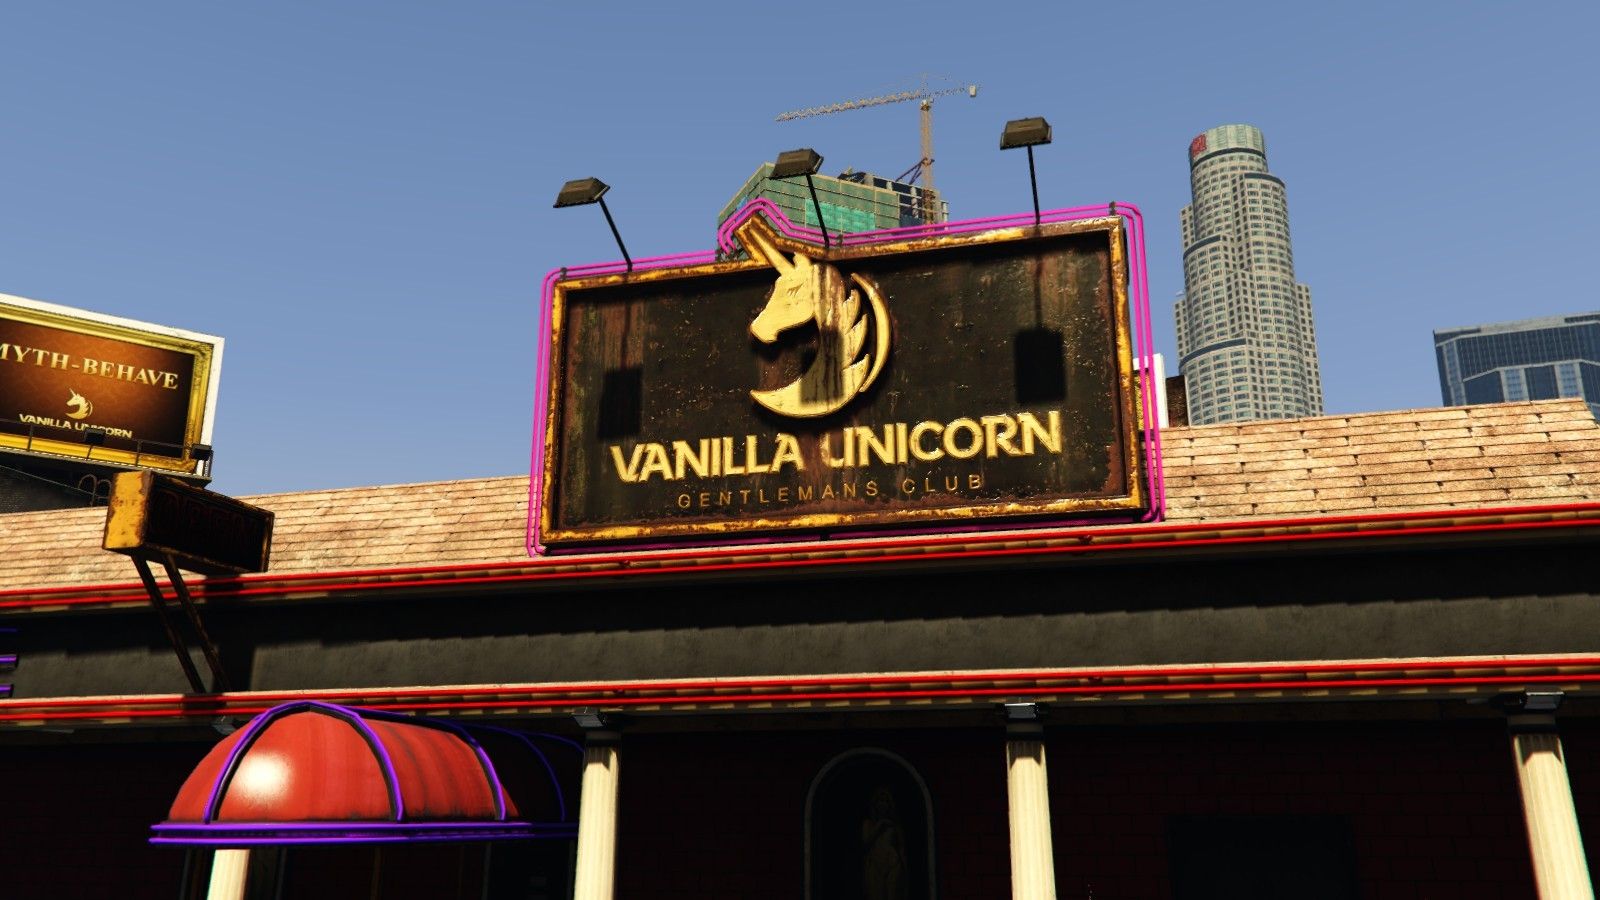 Vanilla unicorn gta 5 wiki фото 7